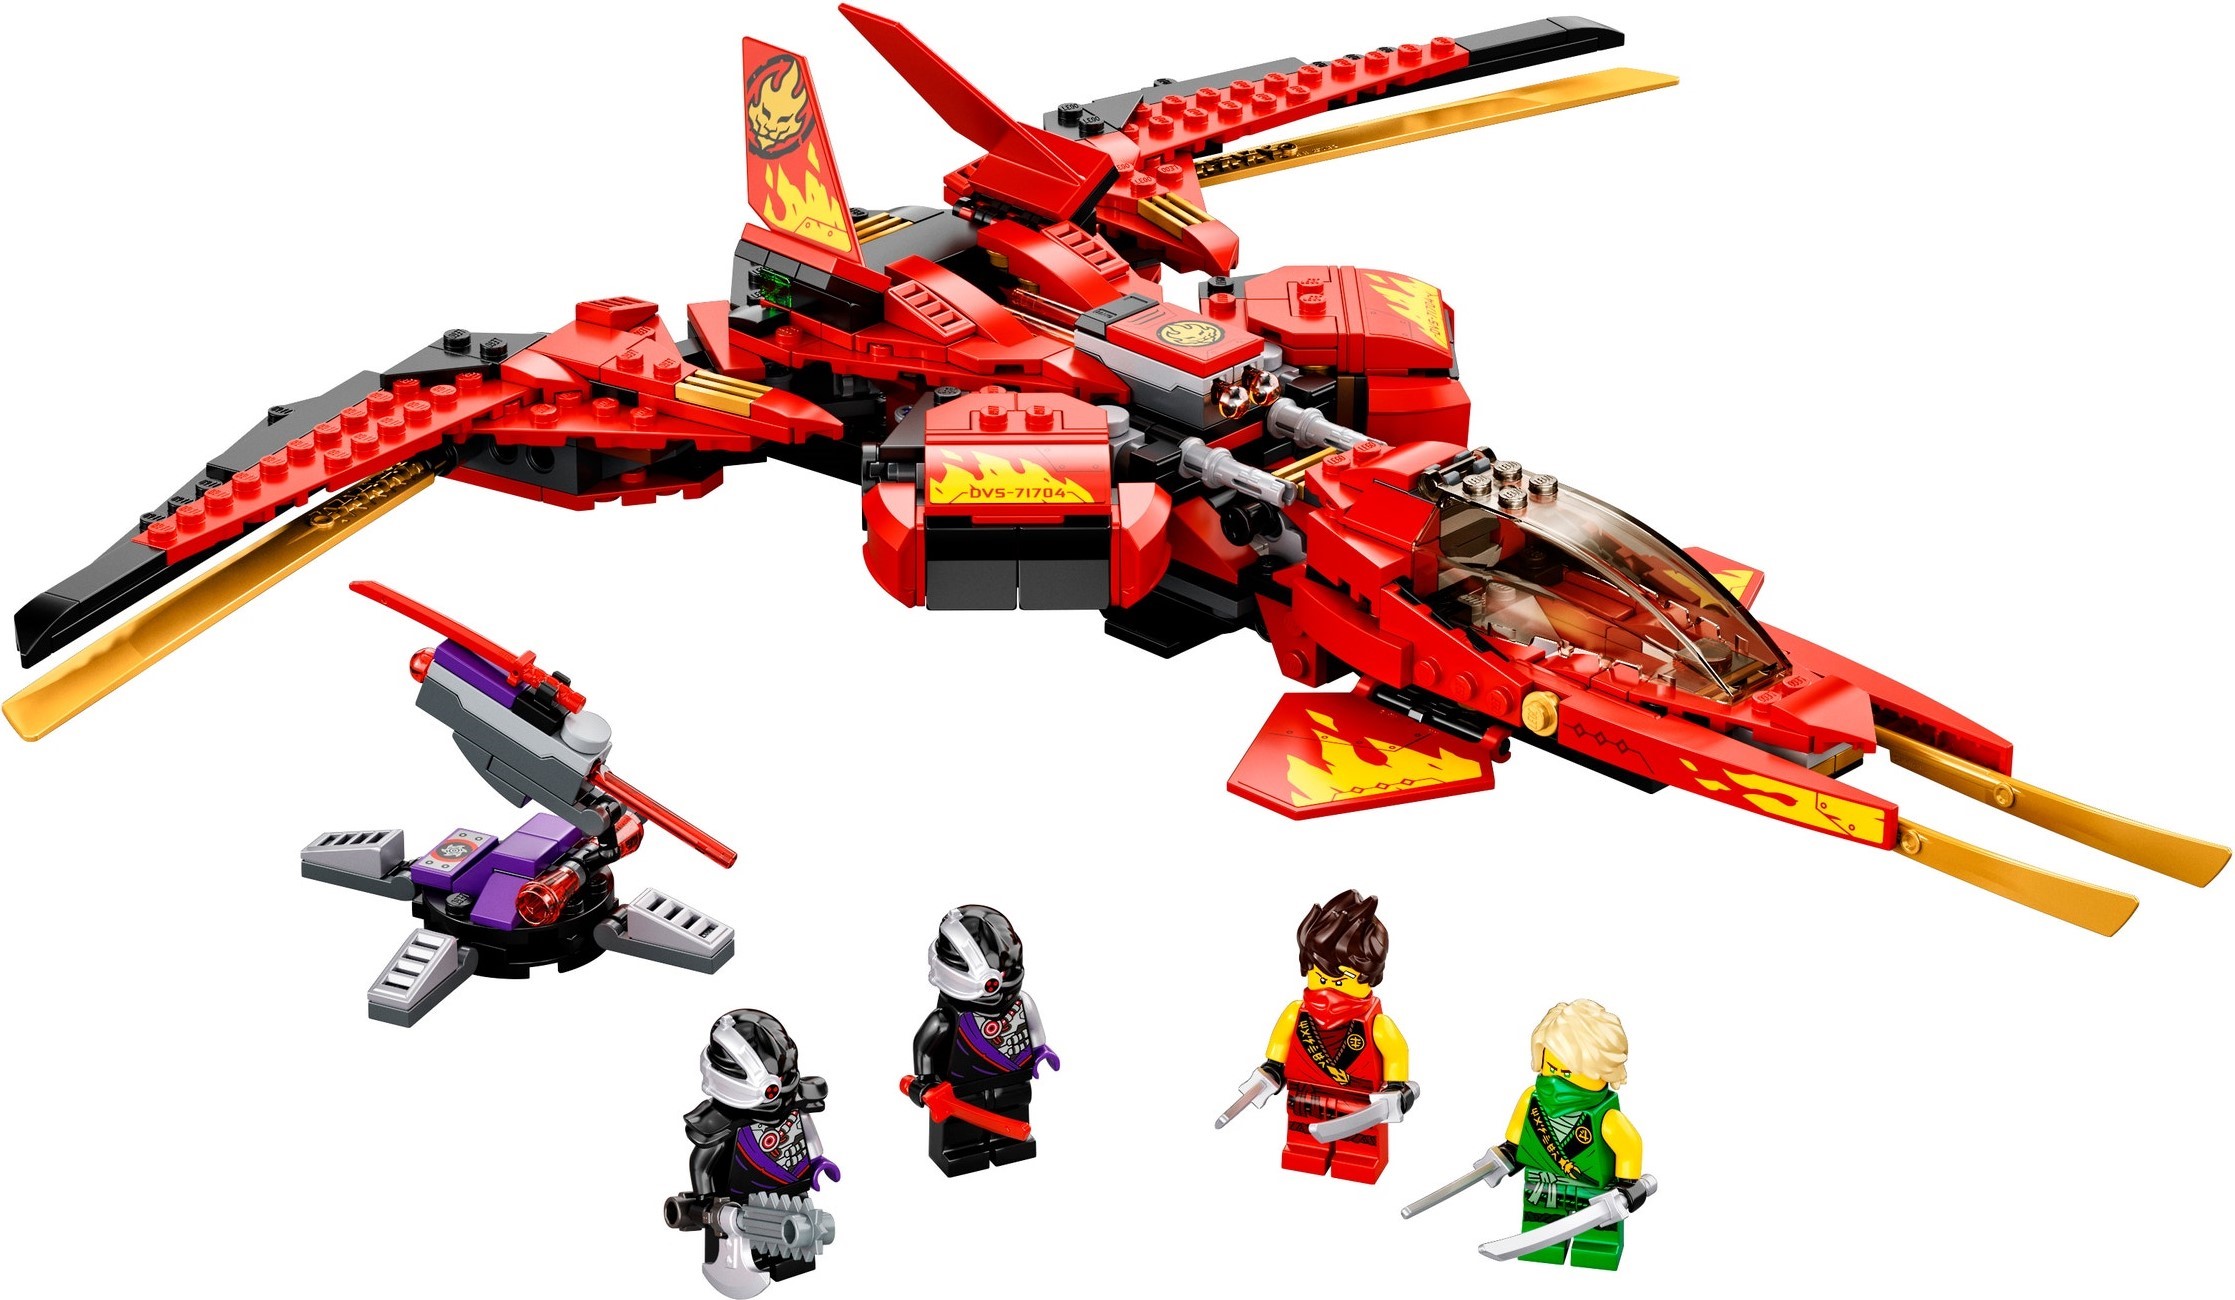 LEGO Ninjago 2020 Brickset